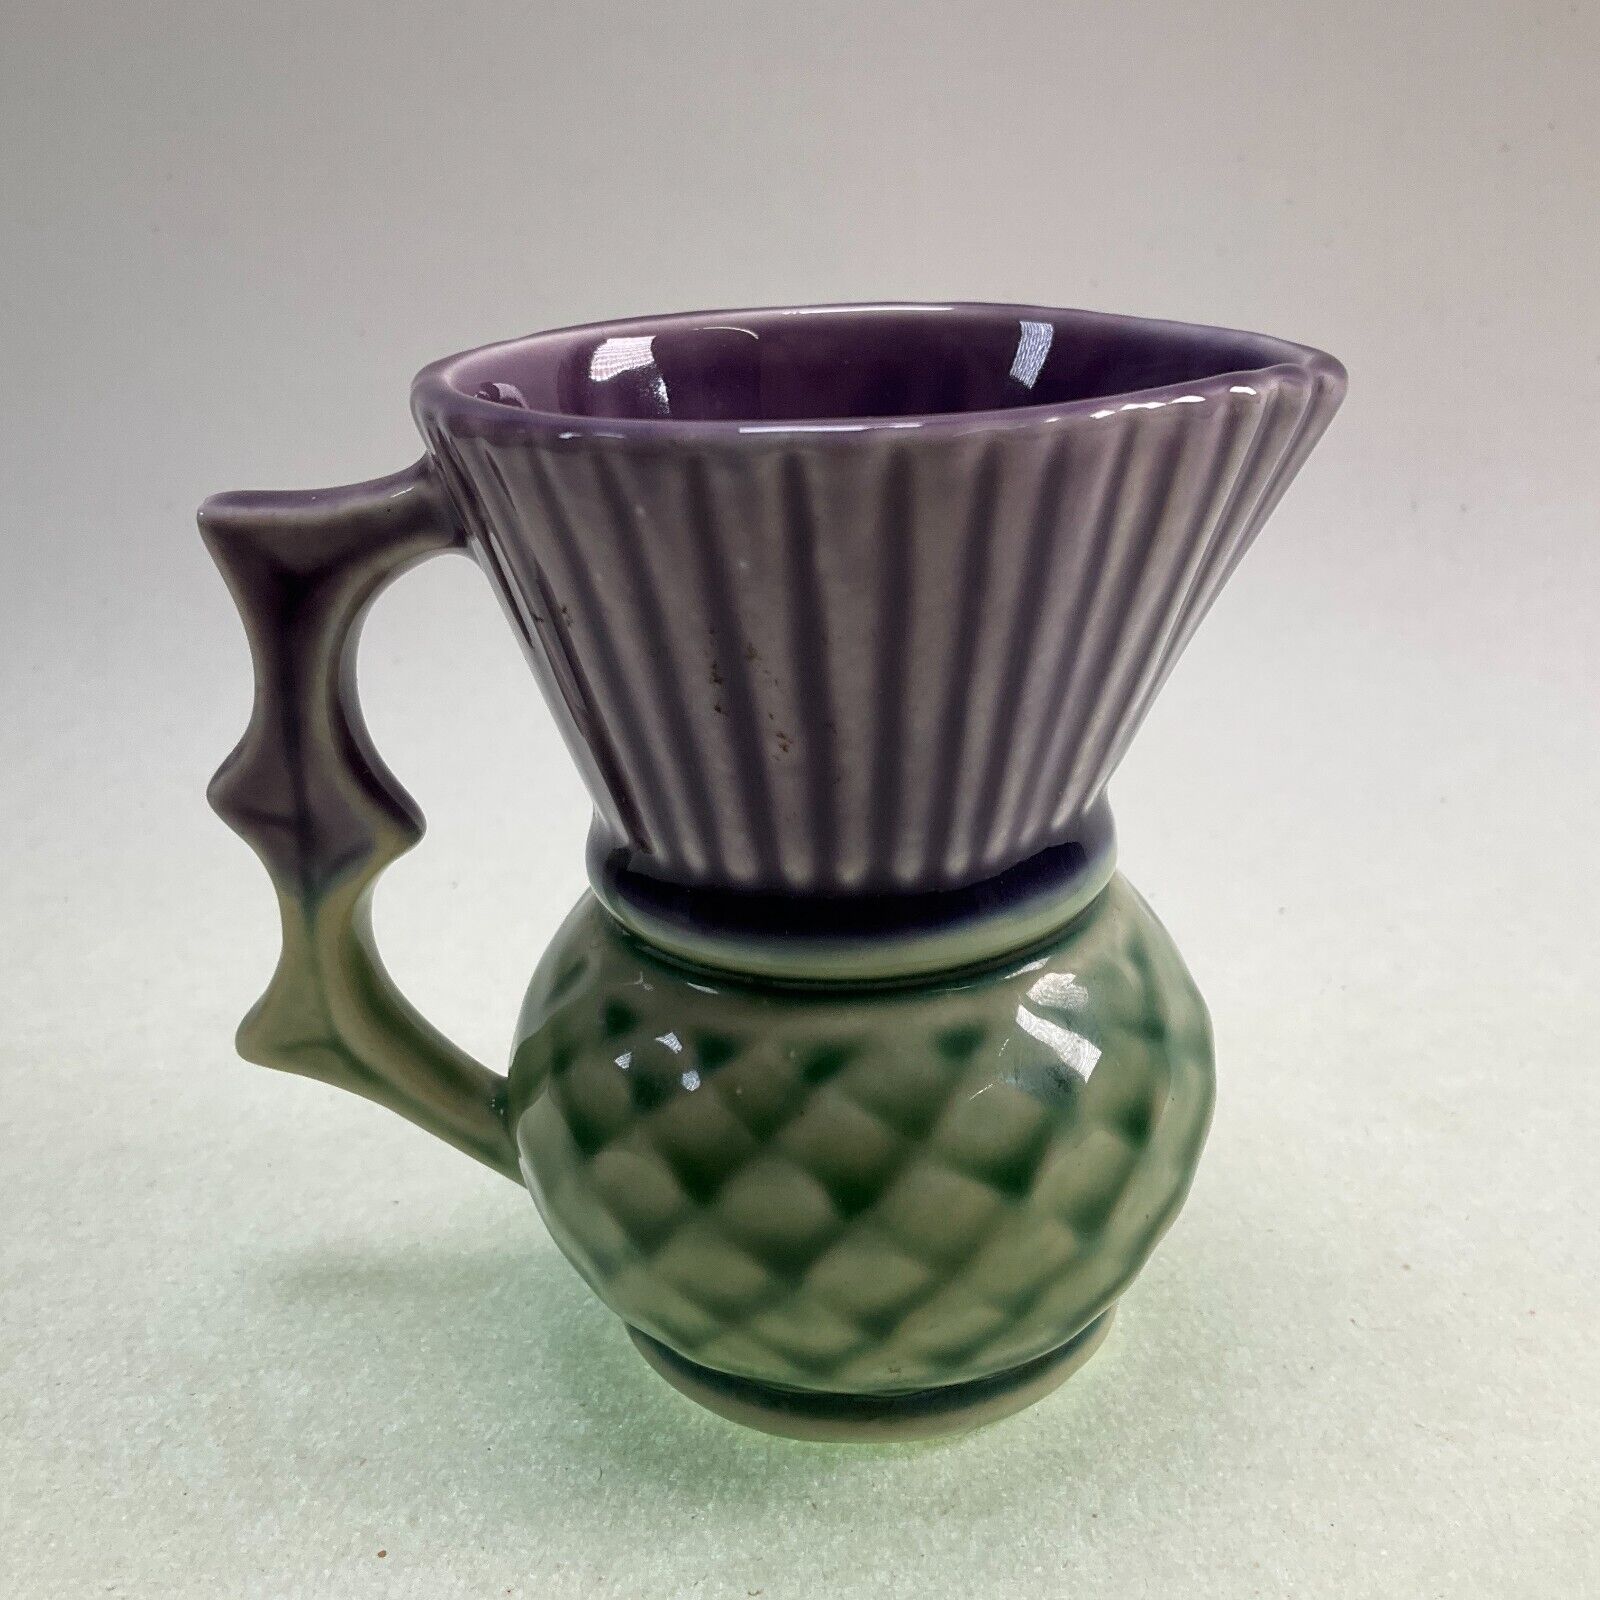 Clyde Ceramics Scotland Thistle Purple & Green Creamer - Vintage